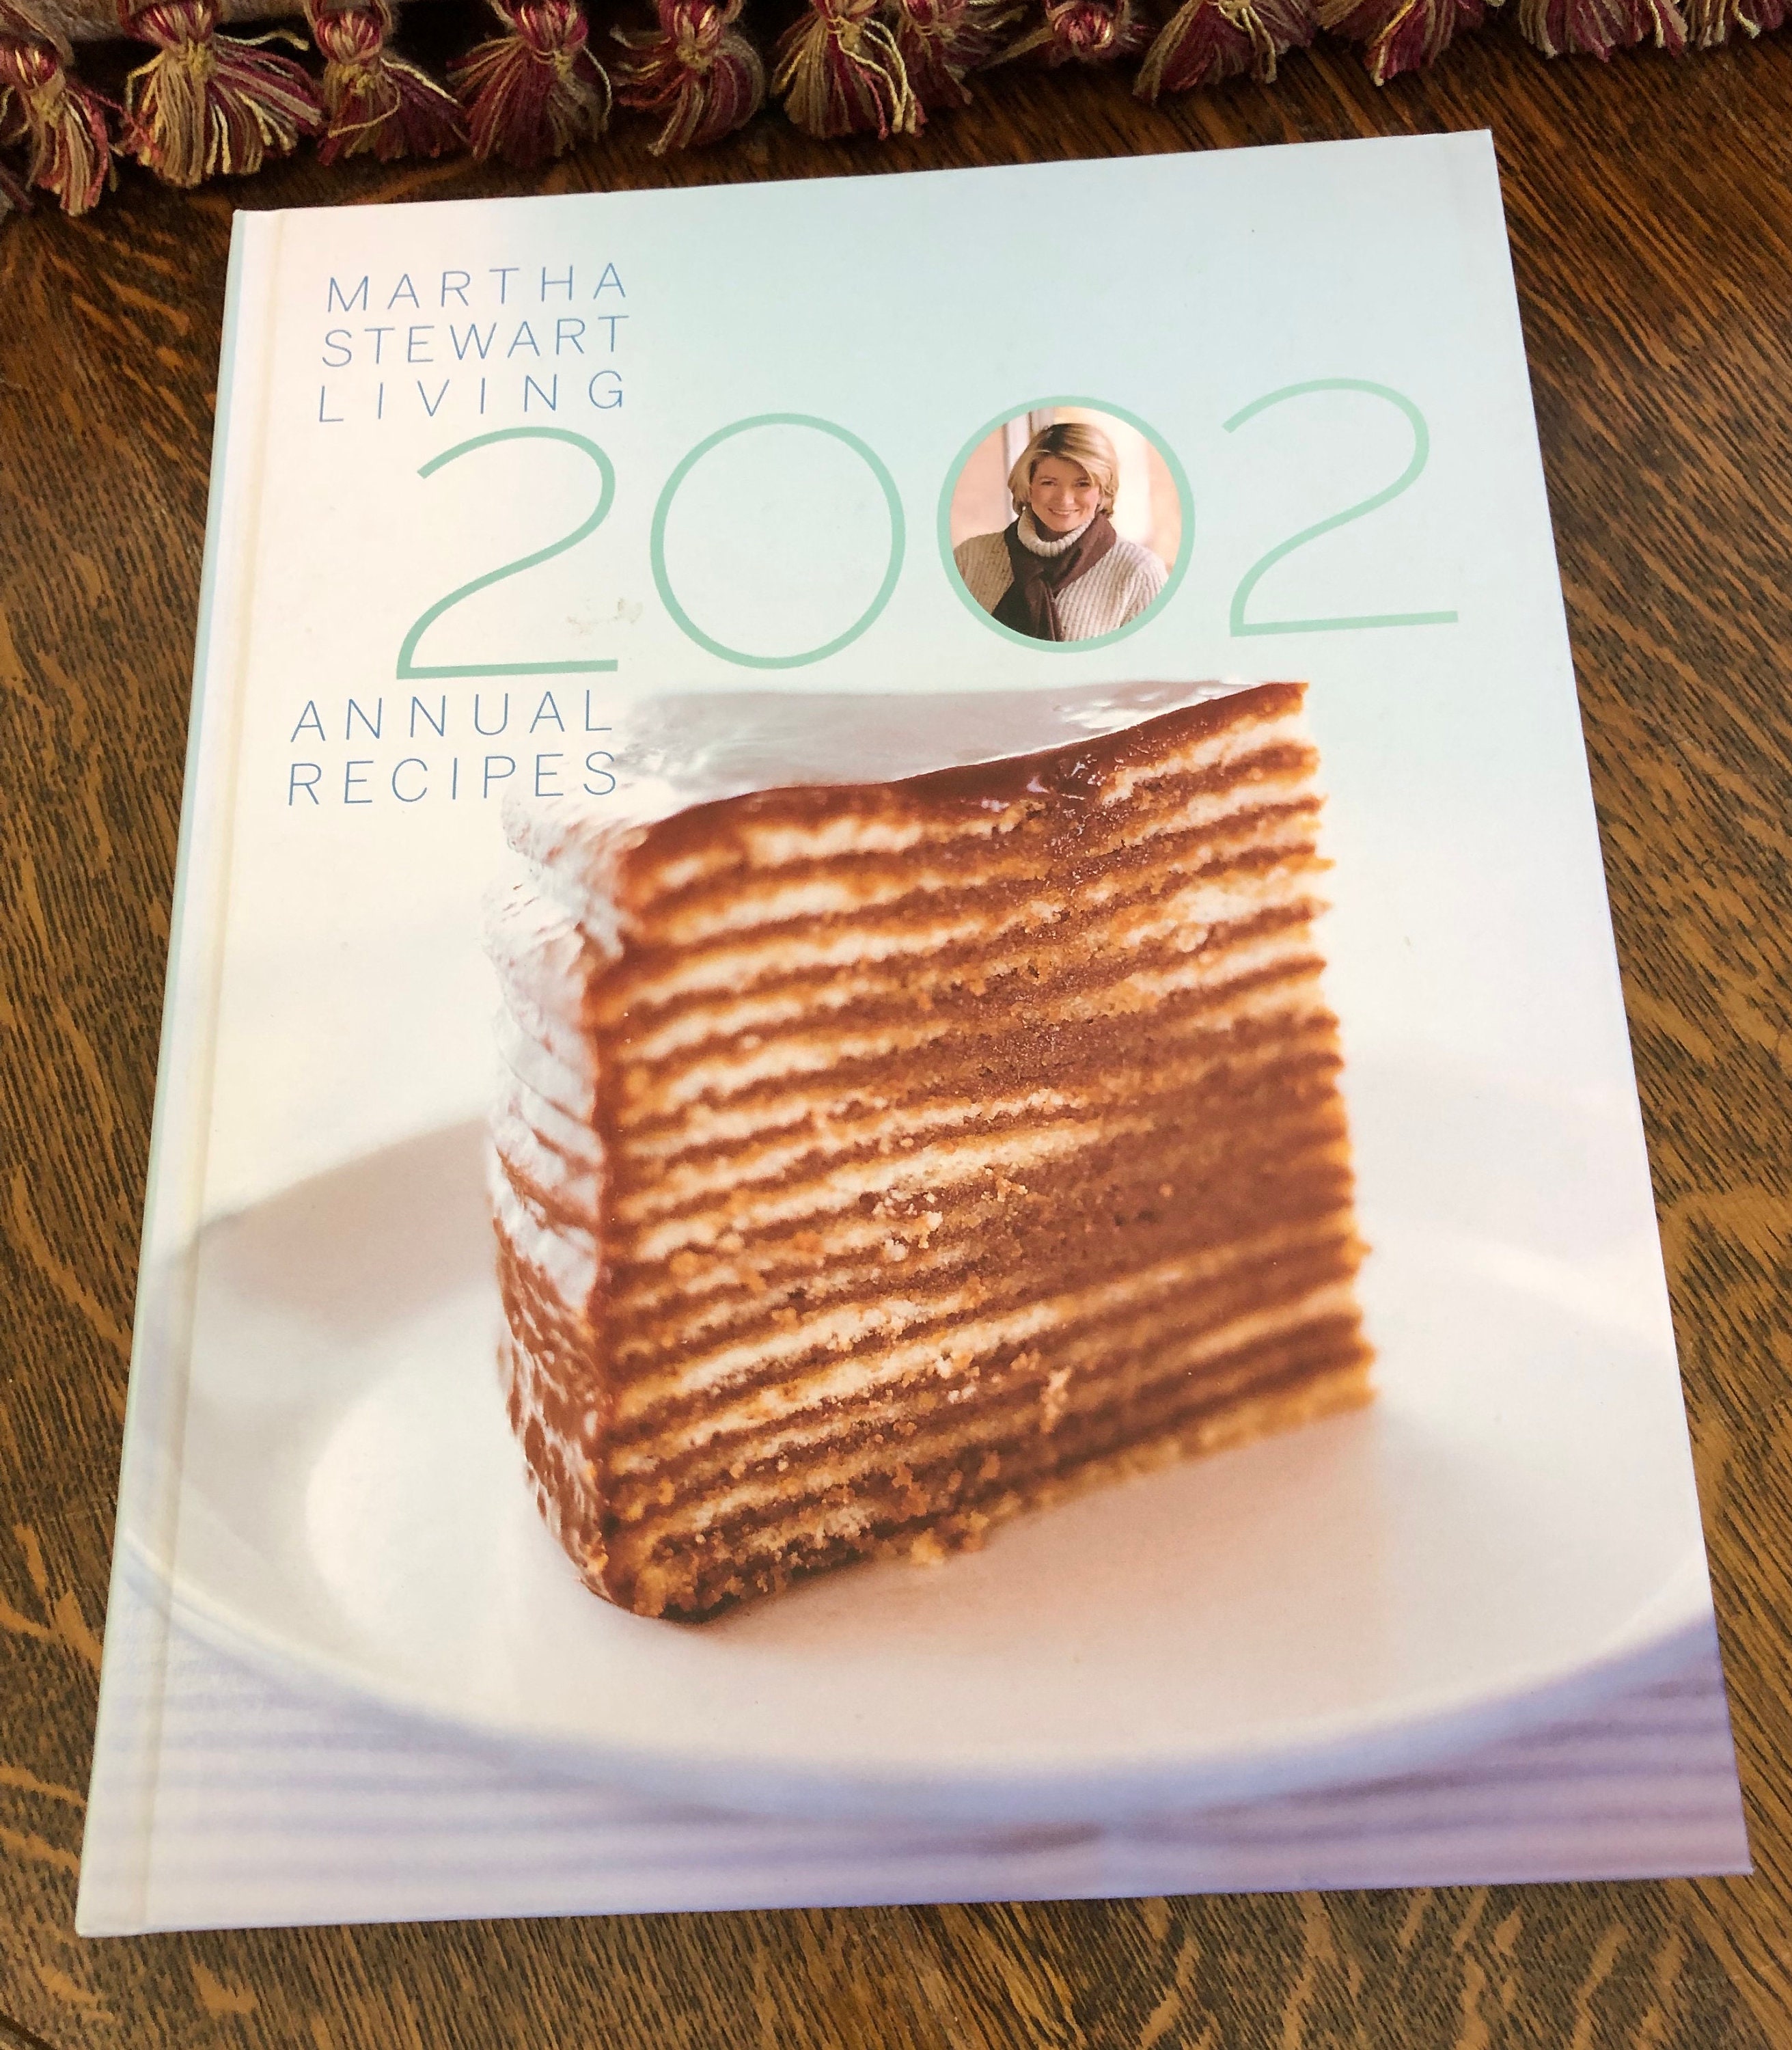 Martha Stewart Living 2002 Annual Recipes Every Recipe From - Etsy España